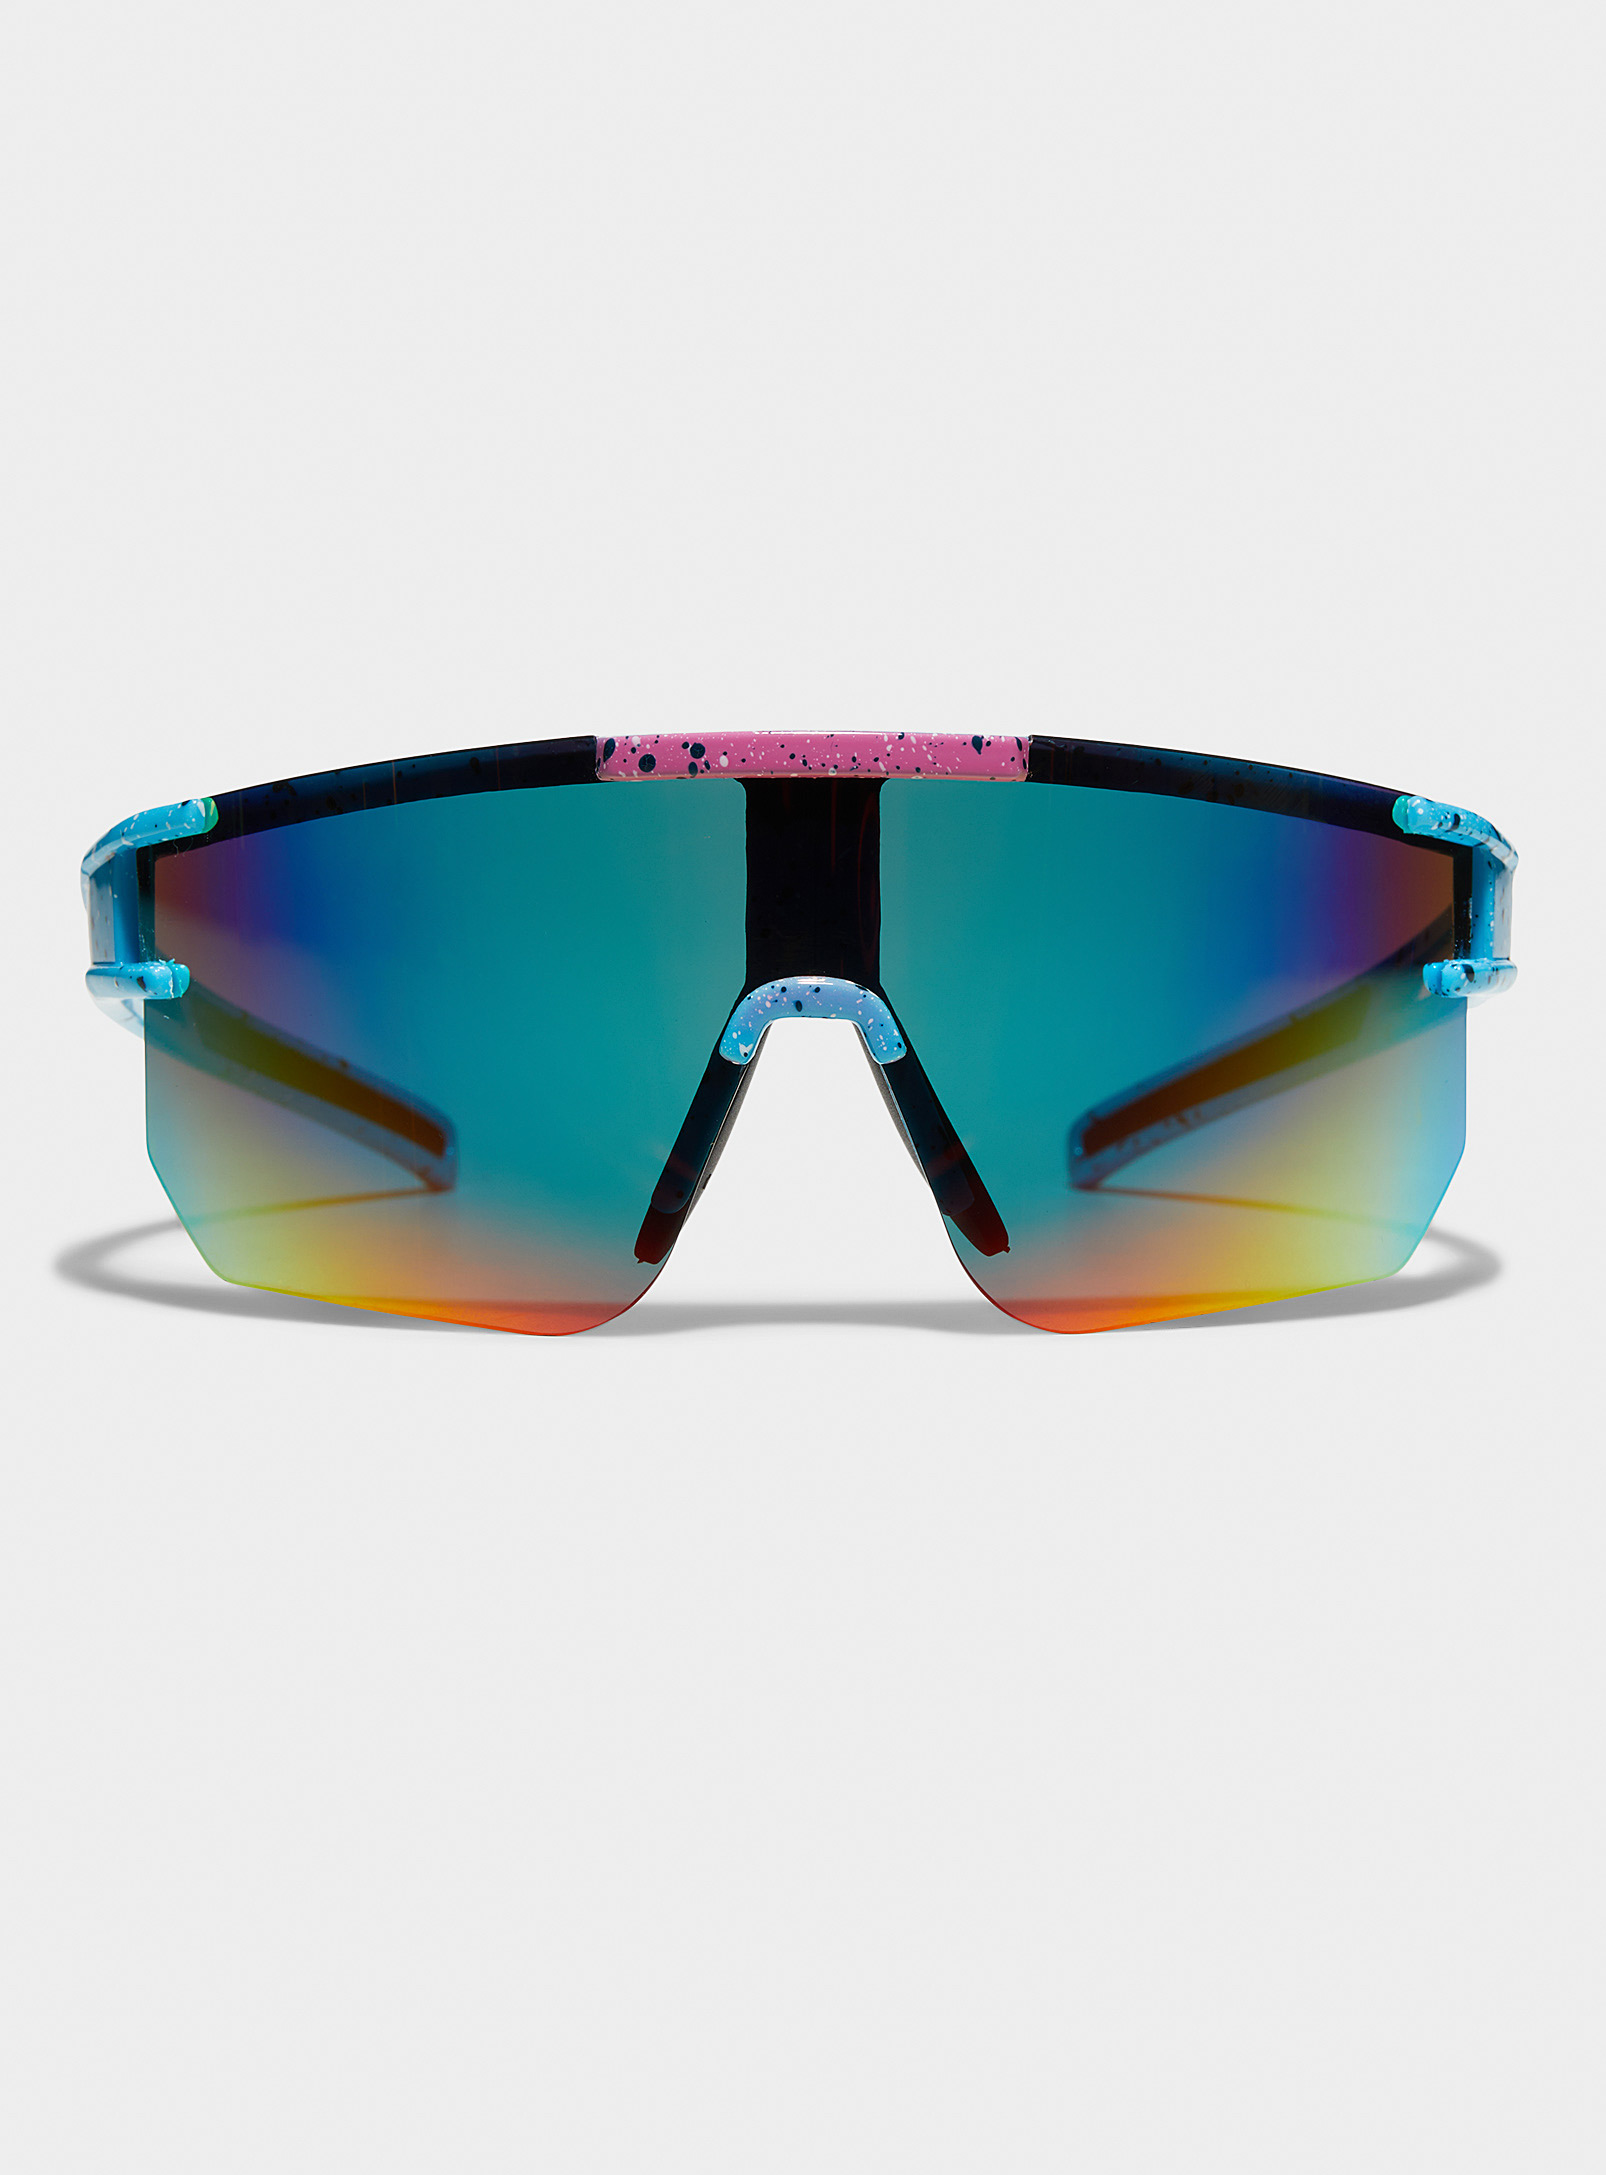 Simons - Women's Rainbow shield sunglasses